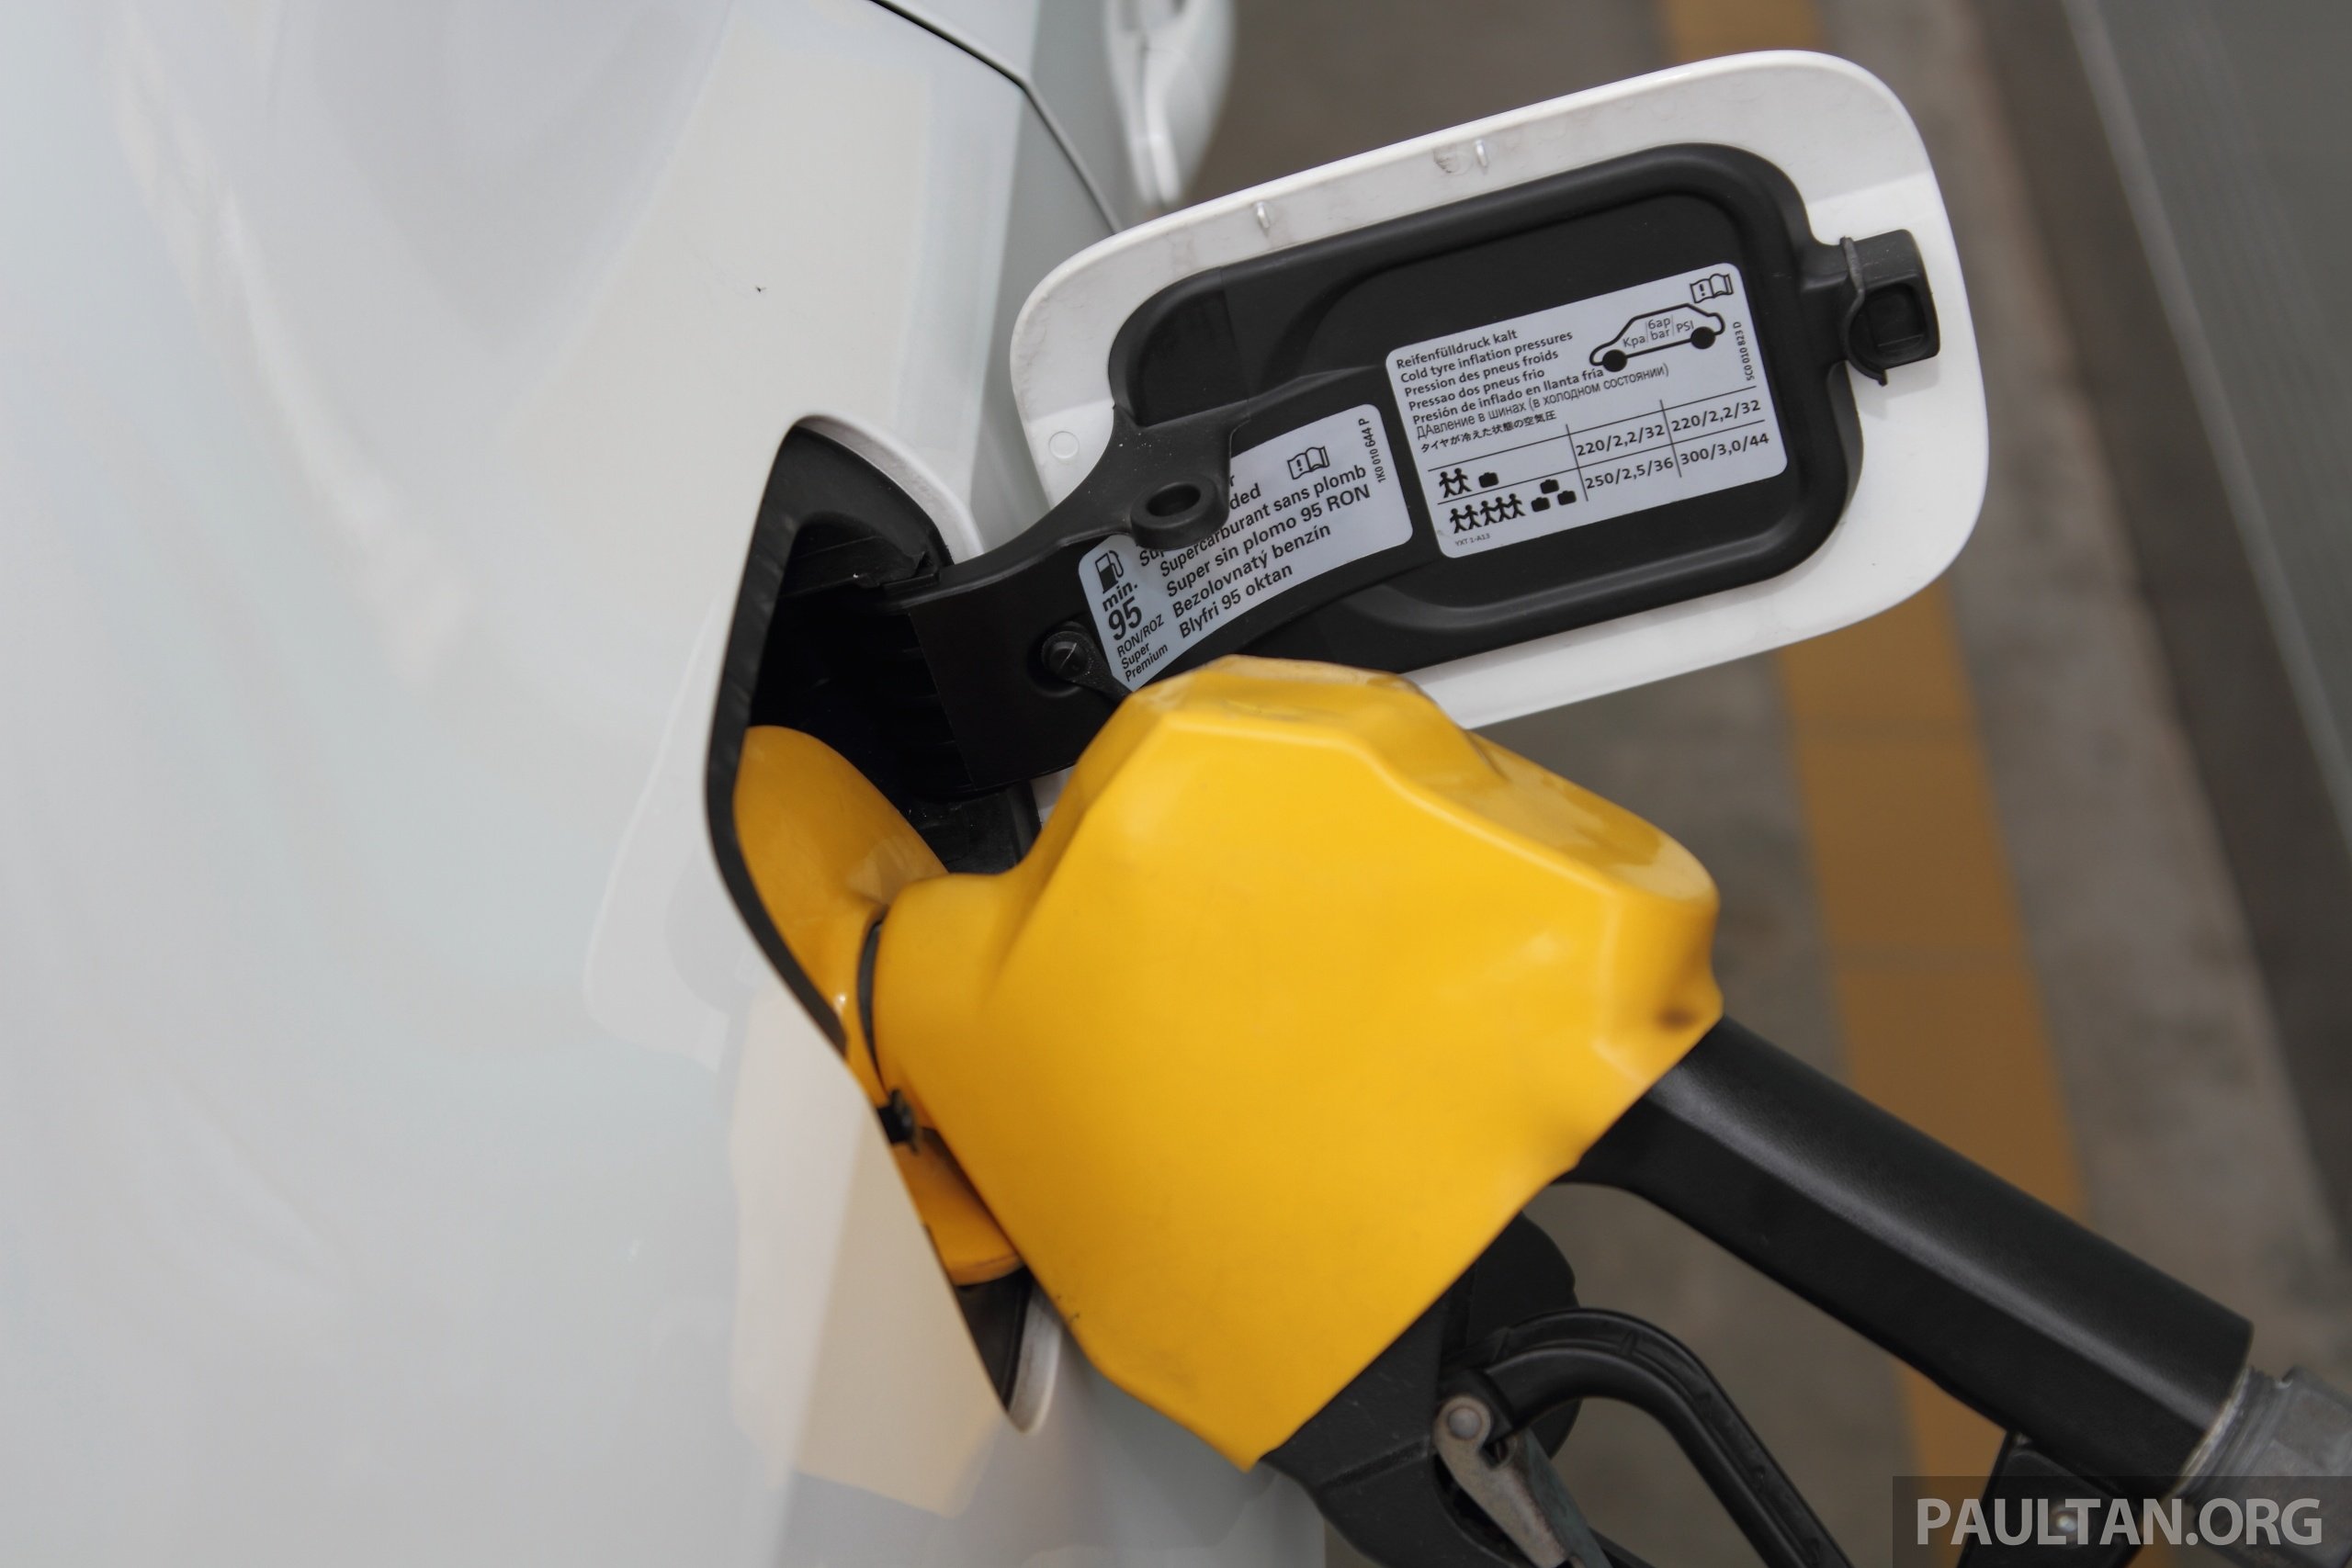 Kerajaan tak mansuh harga siling petrol RON 95 dan diesel, harga maksima masih dikawal – KPDNHEP